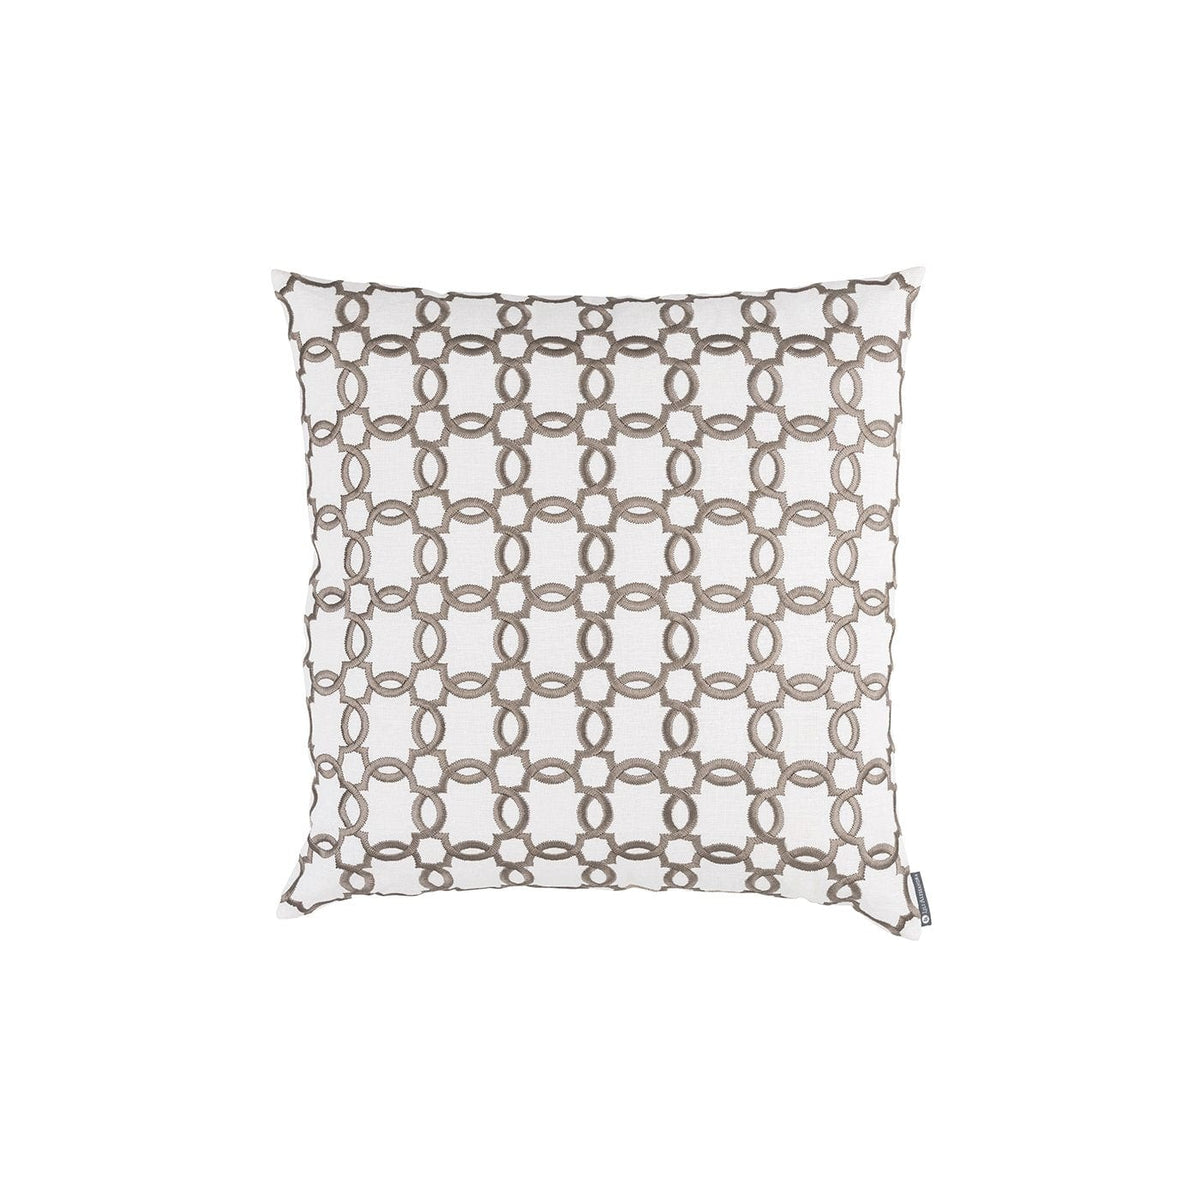 Lynx Dark Sand Decorative Pillow by Lili Alessandra | Fig Linens 